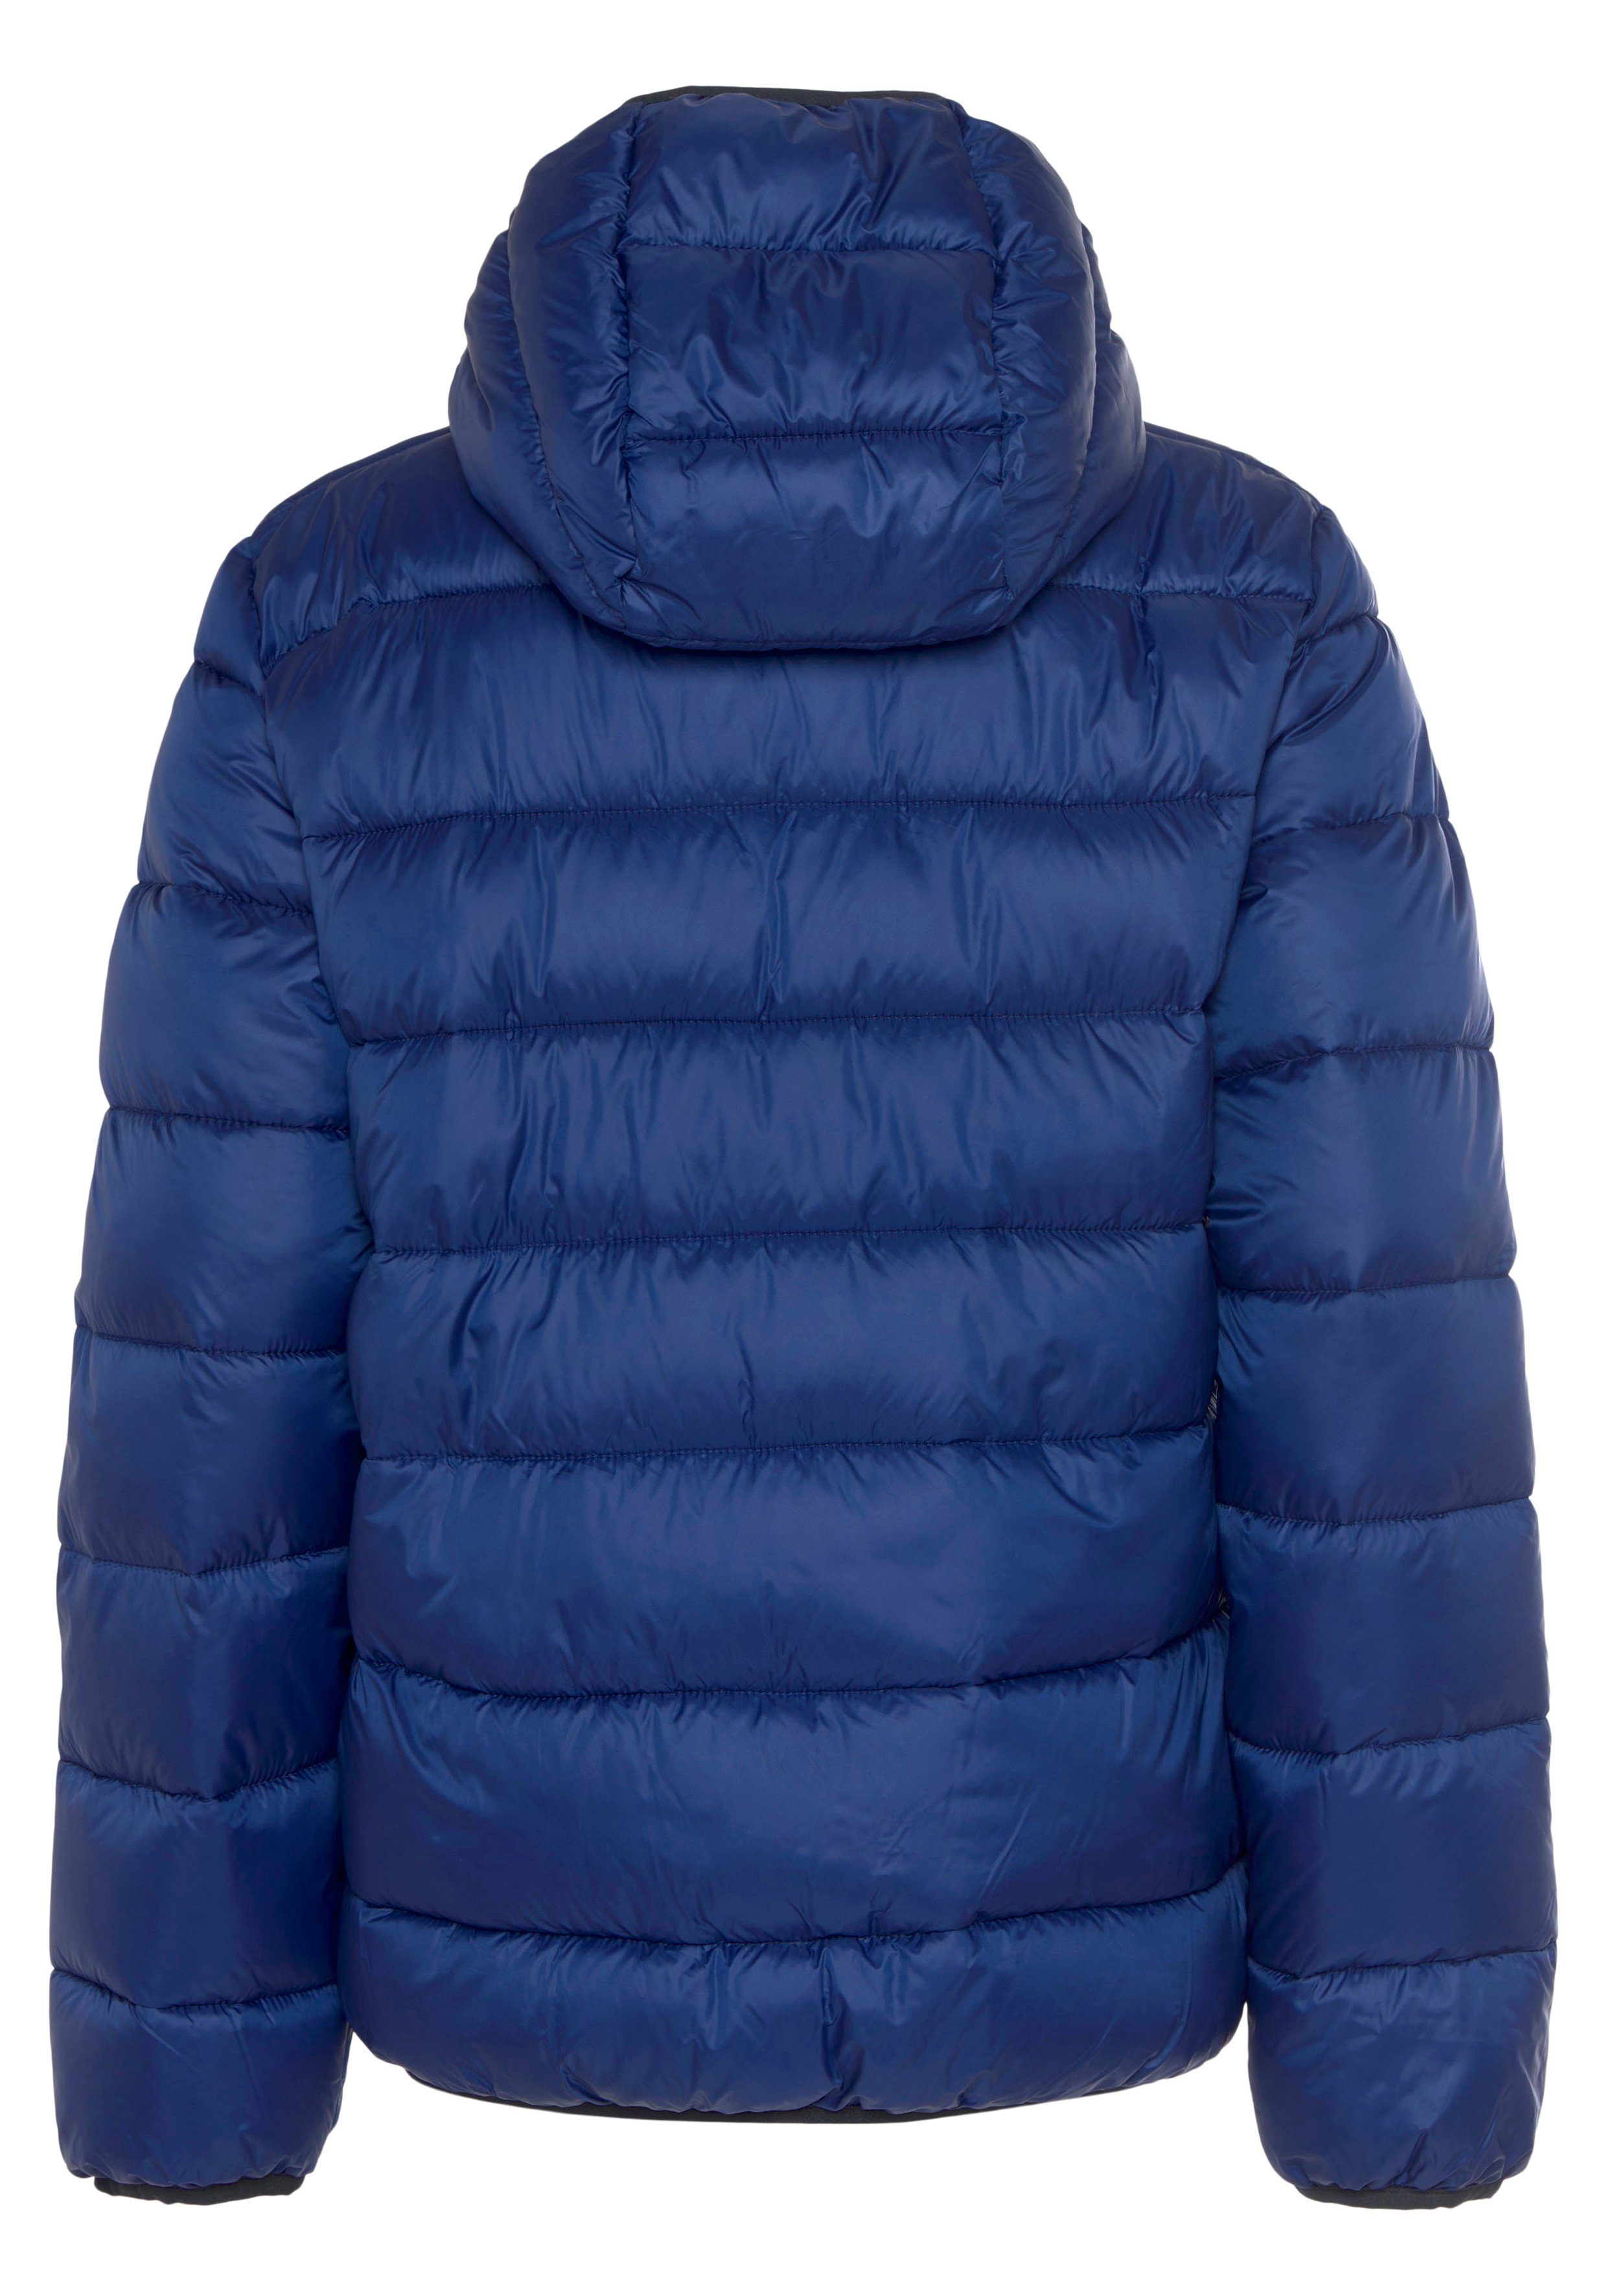 Champion Steppjacke für Hooded blau Kinder Outdoor - Jacket